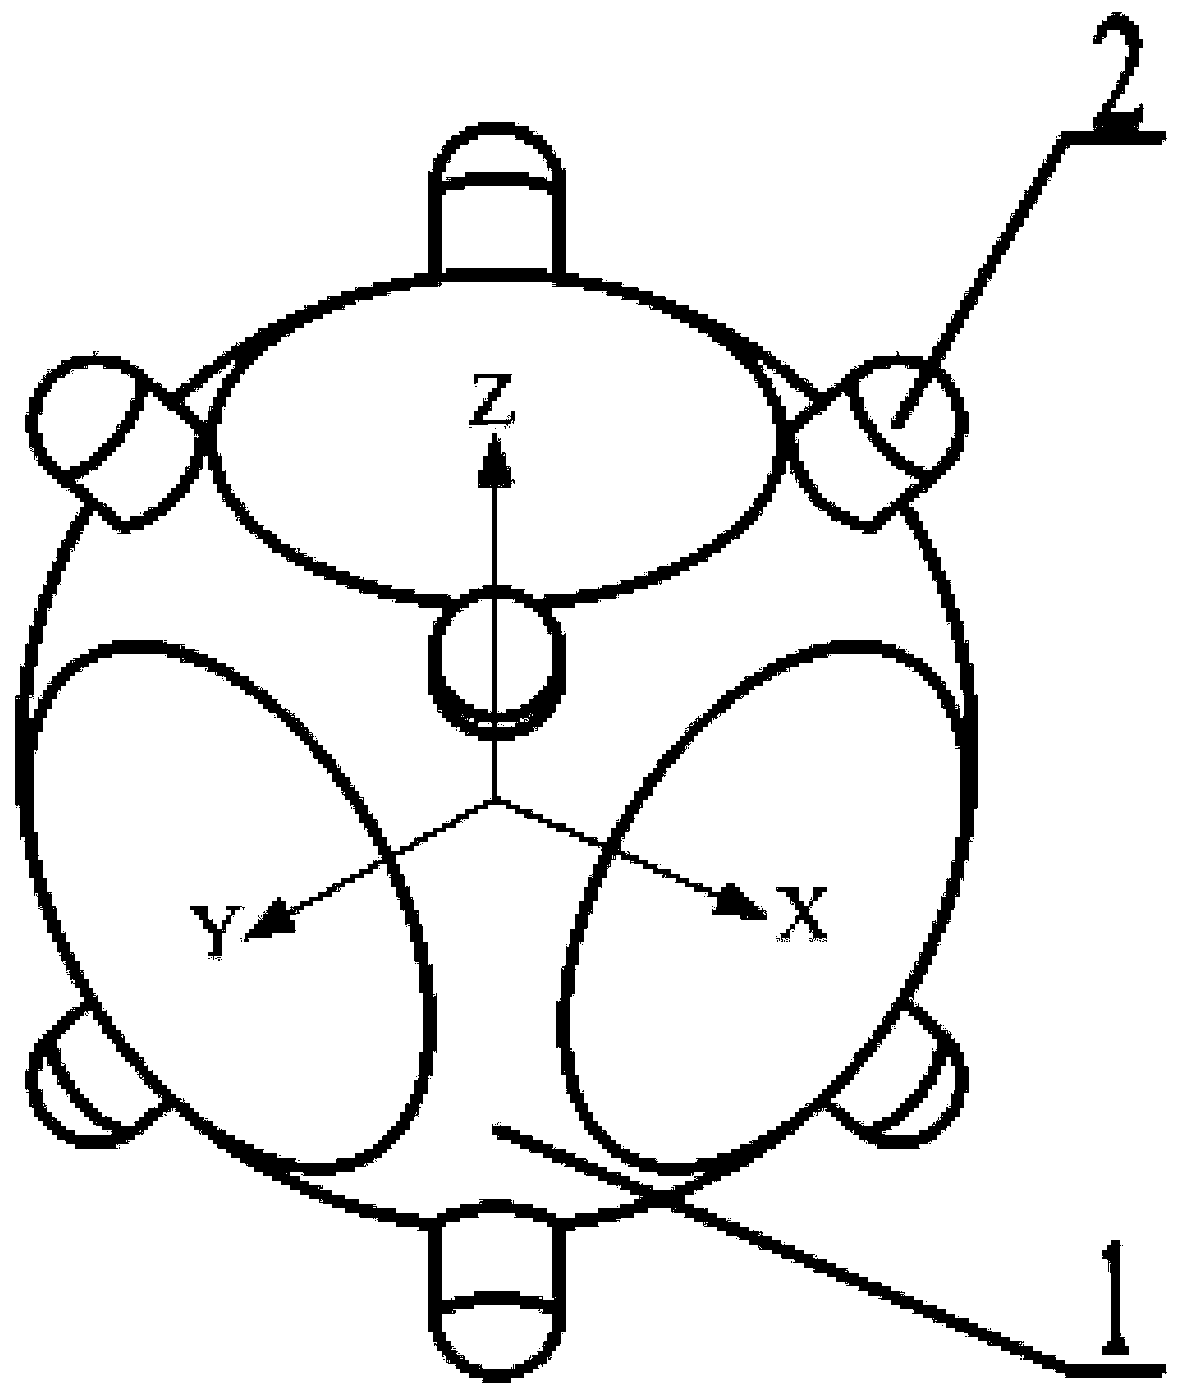 Three-degree-of-freedom spherical stator ultrasonic motor stator base and its excitation method